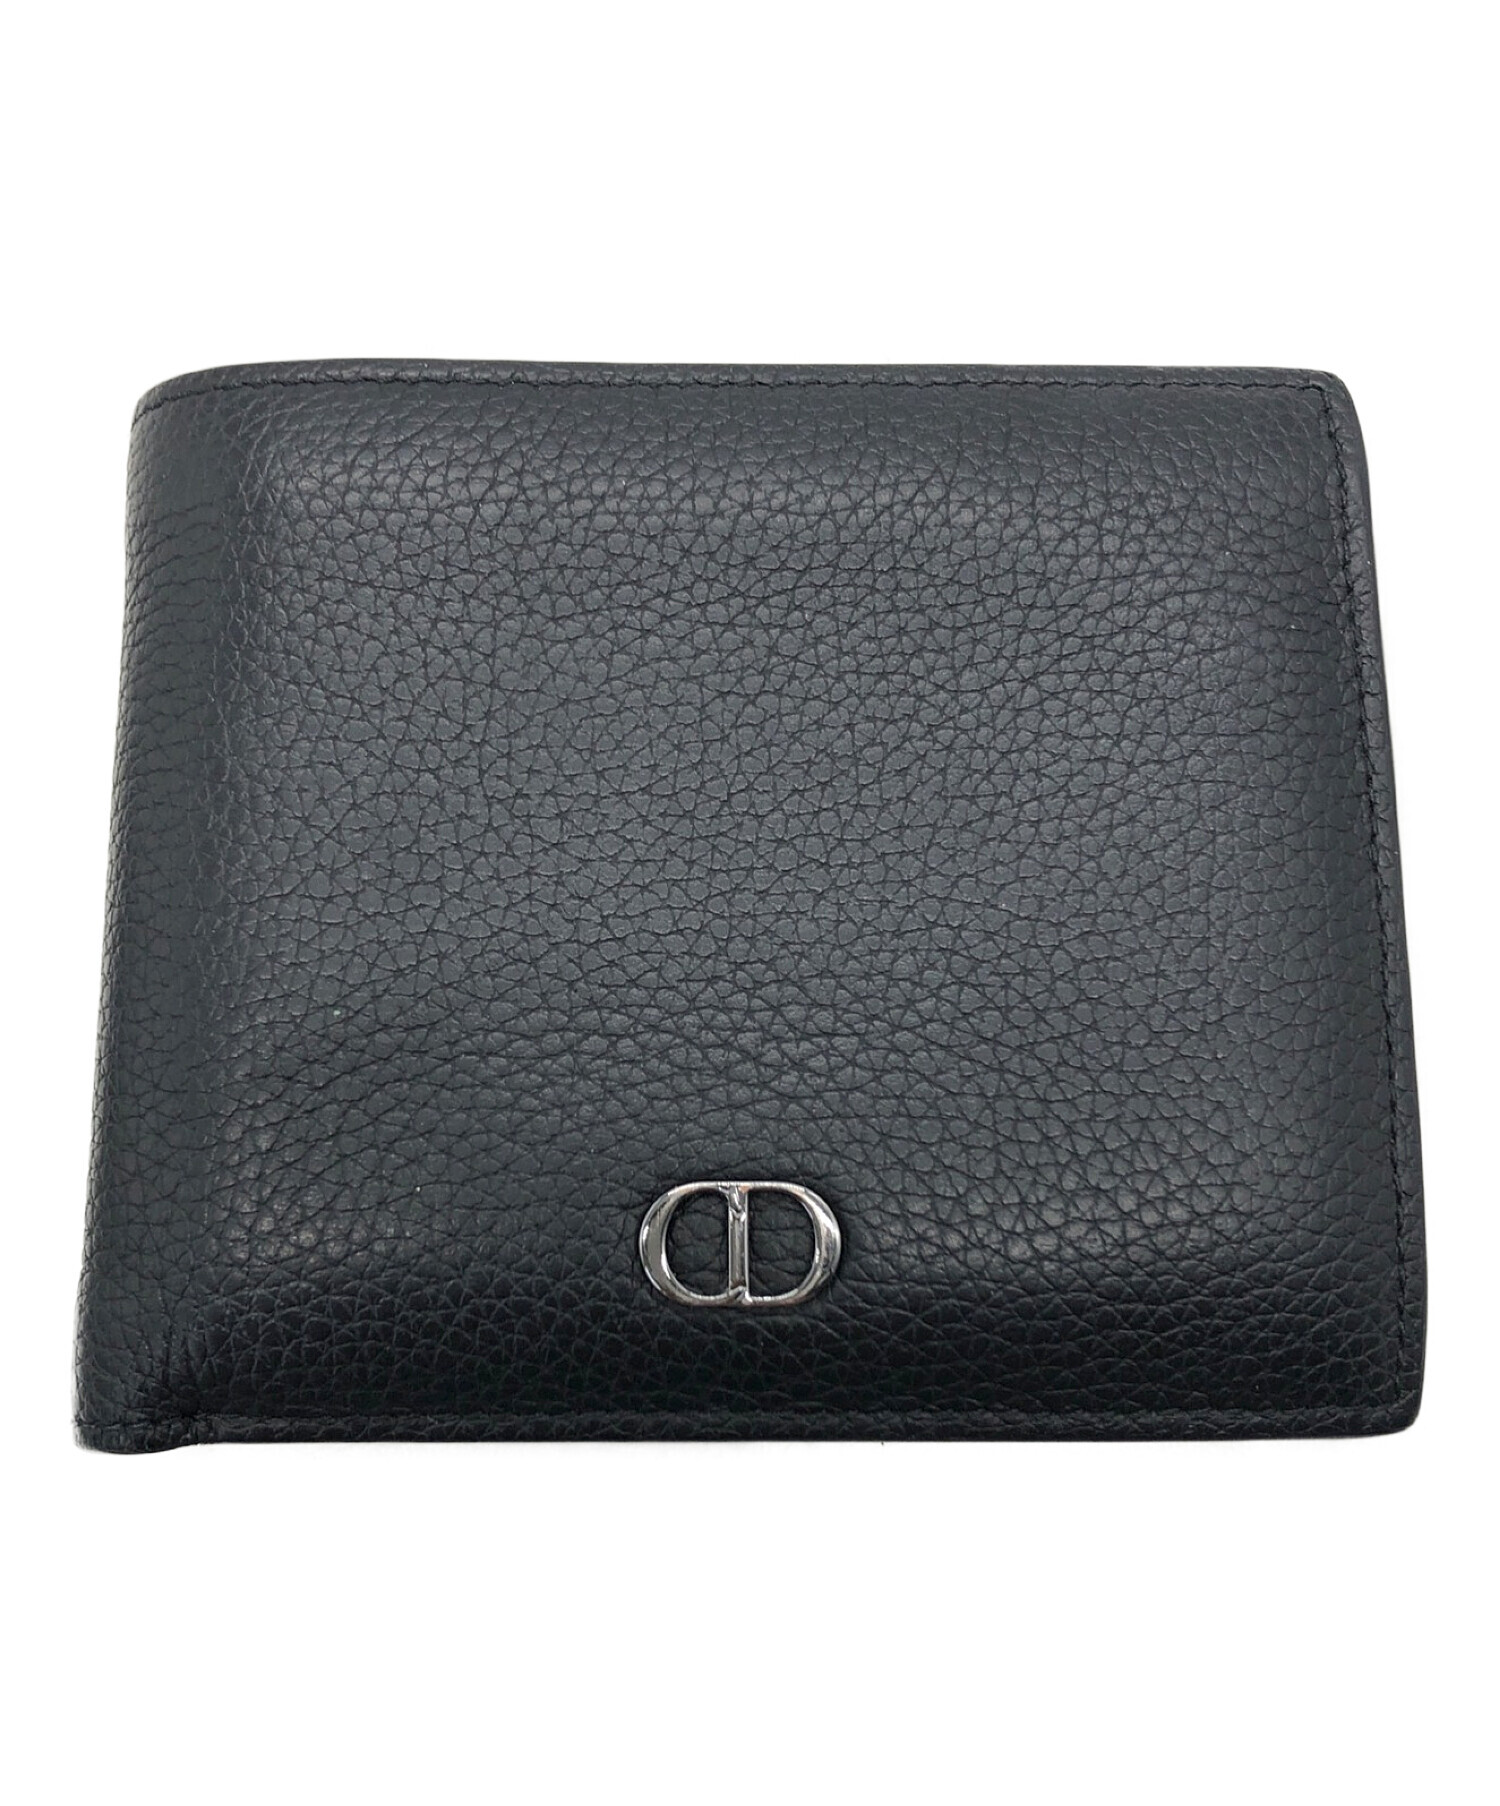 Christian Dior (クリスチャン ディオール) 2つ折り財布 ブラック